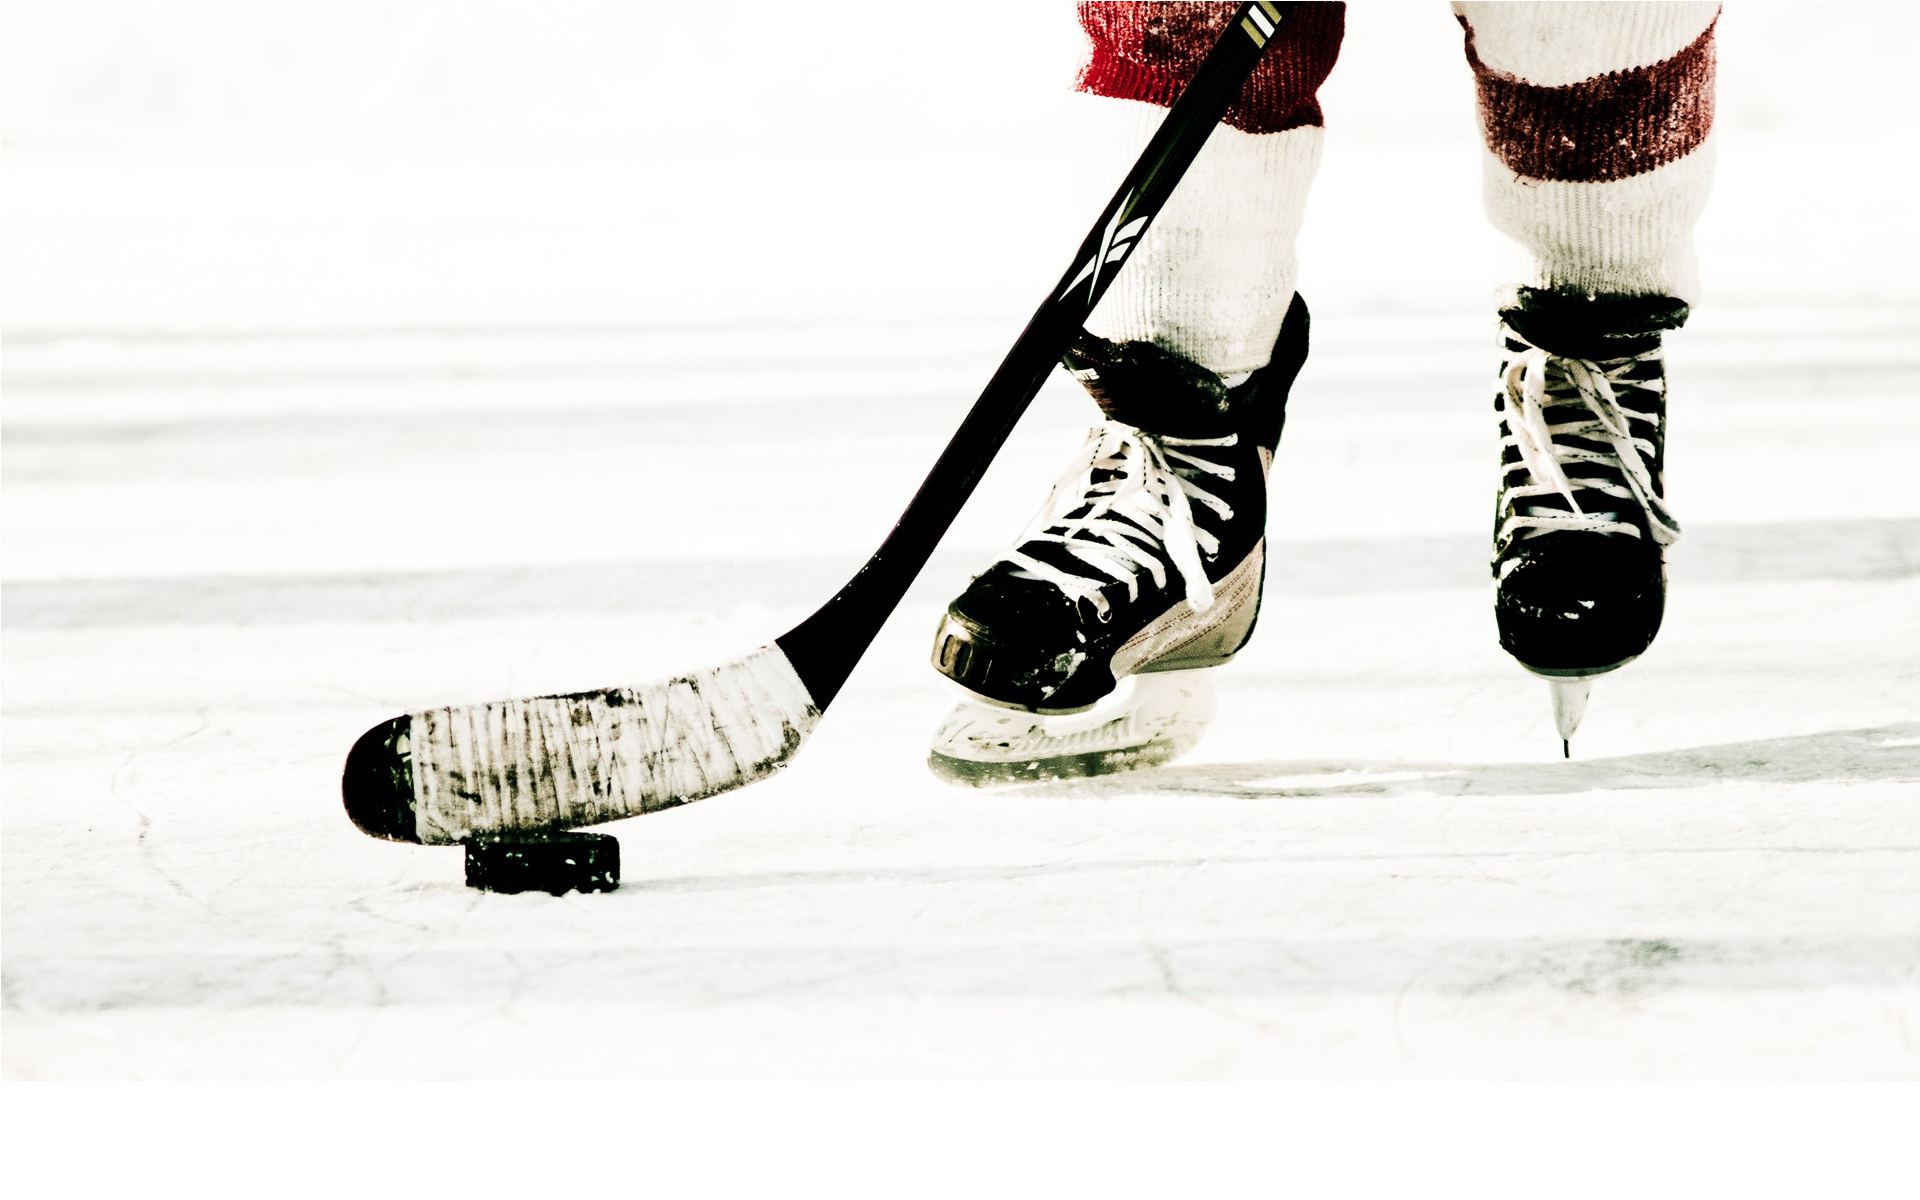 hockey wallpaper,hockey,ice hockey,footwear,bandy,stick and ball games